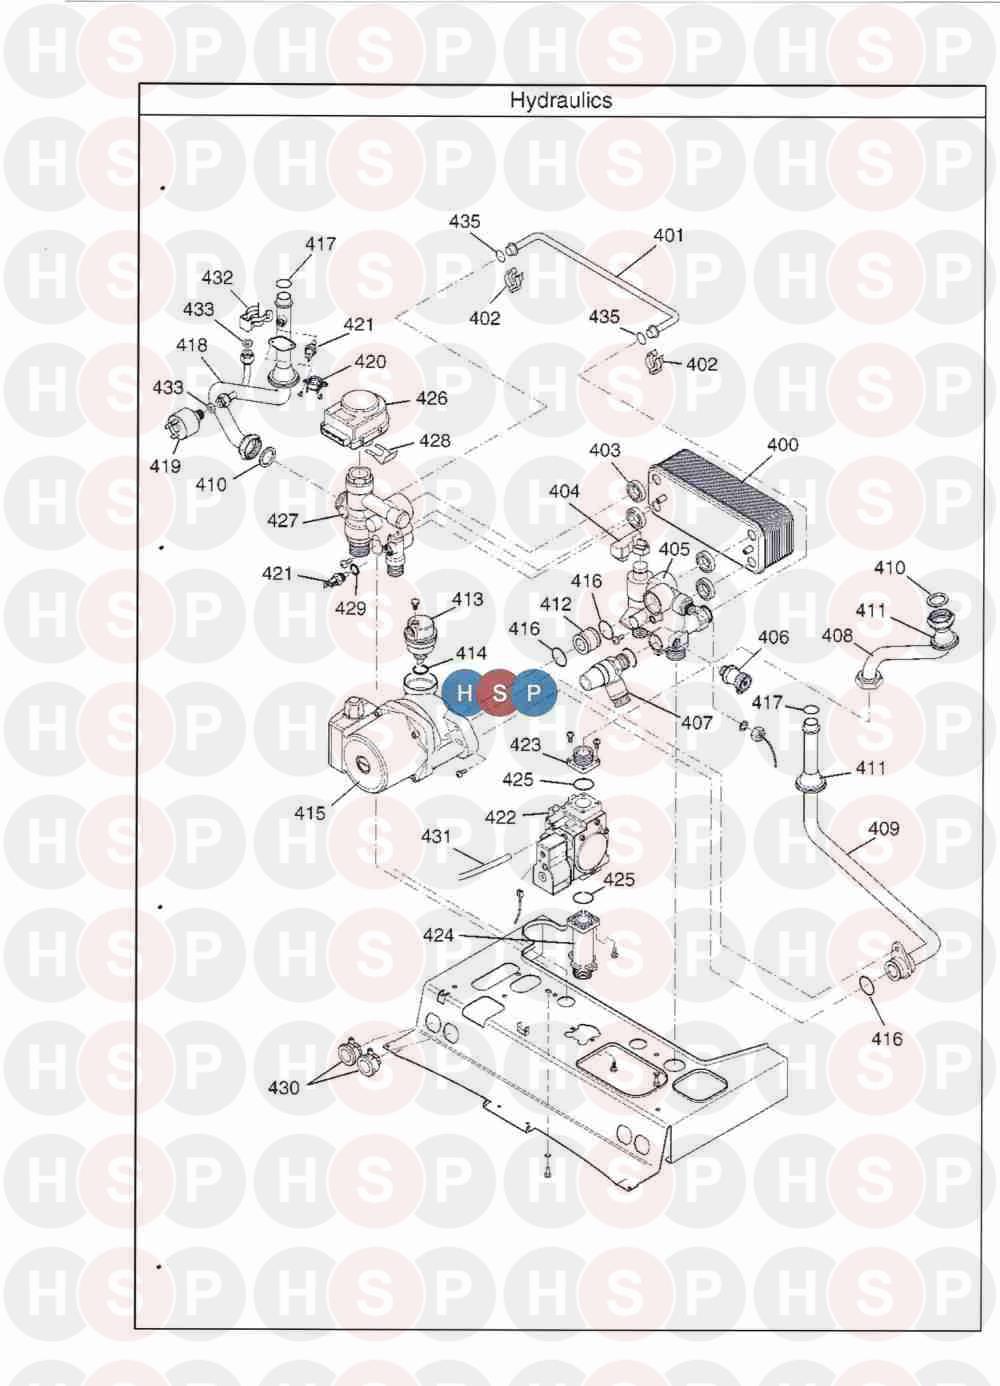 Hydraulics diagram for Potterton Gold 33 HE Combi